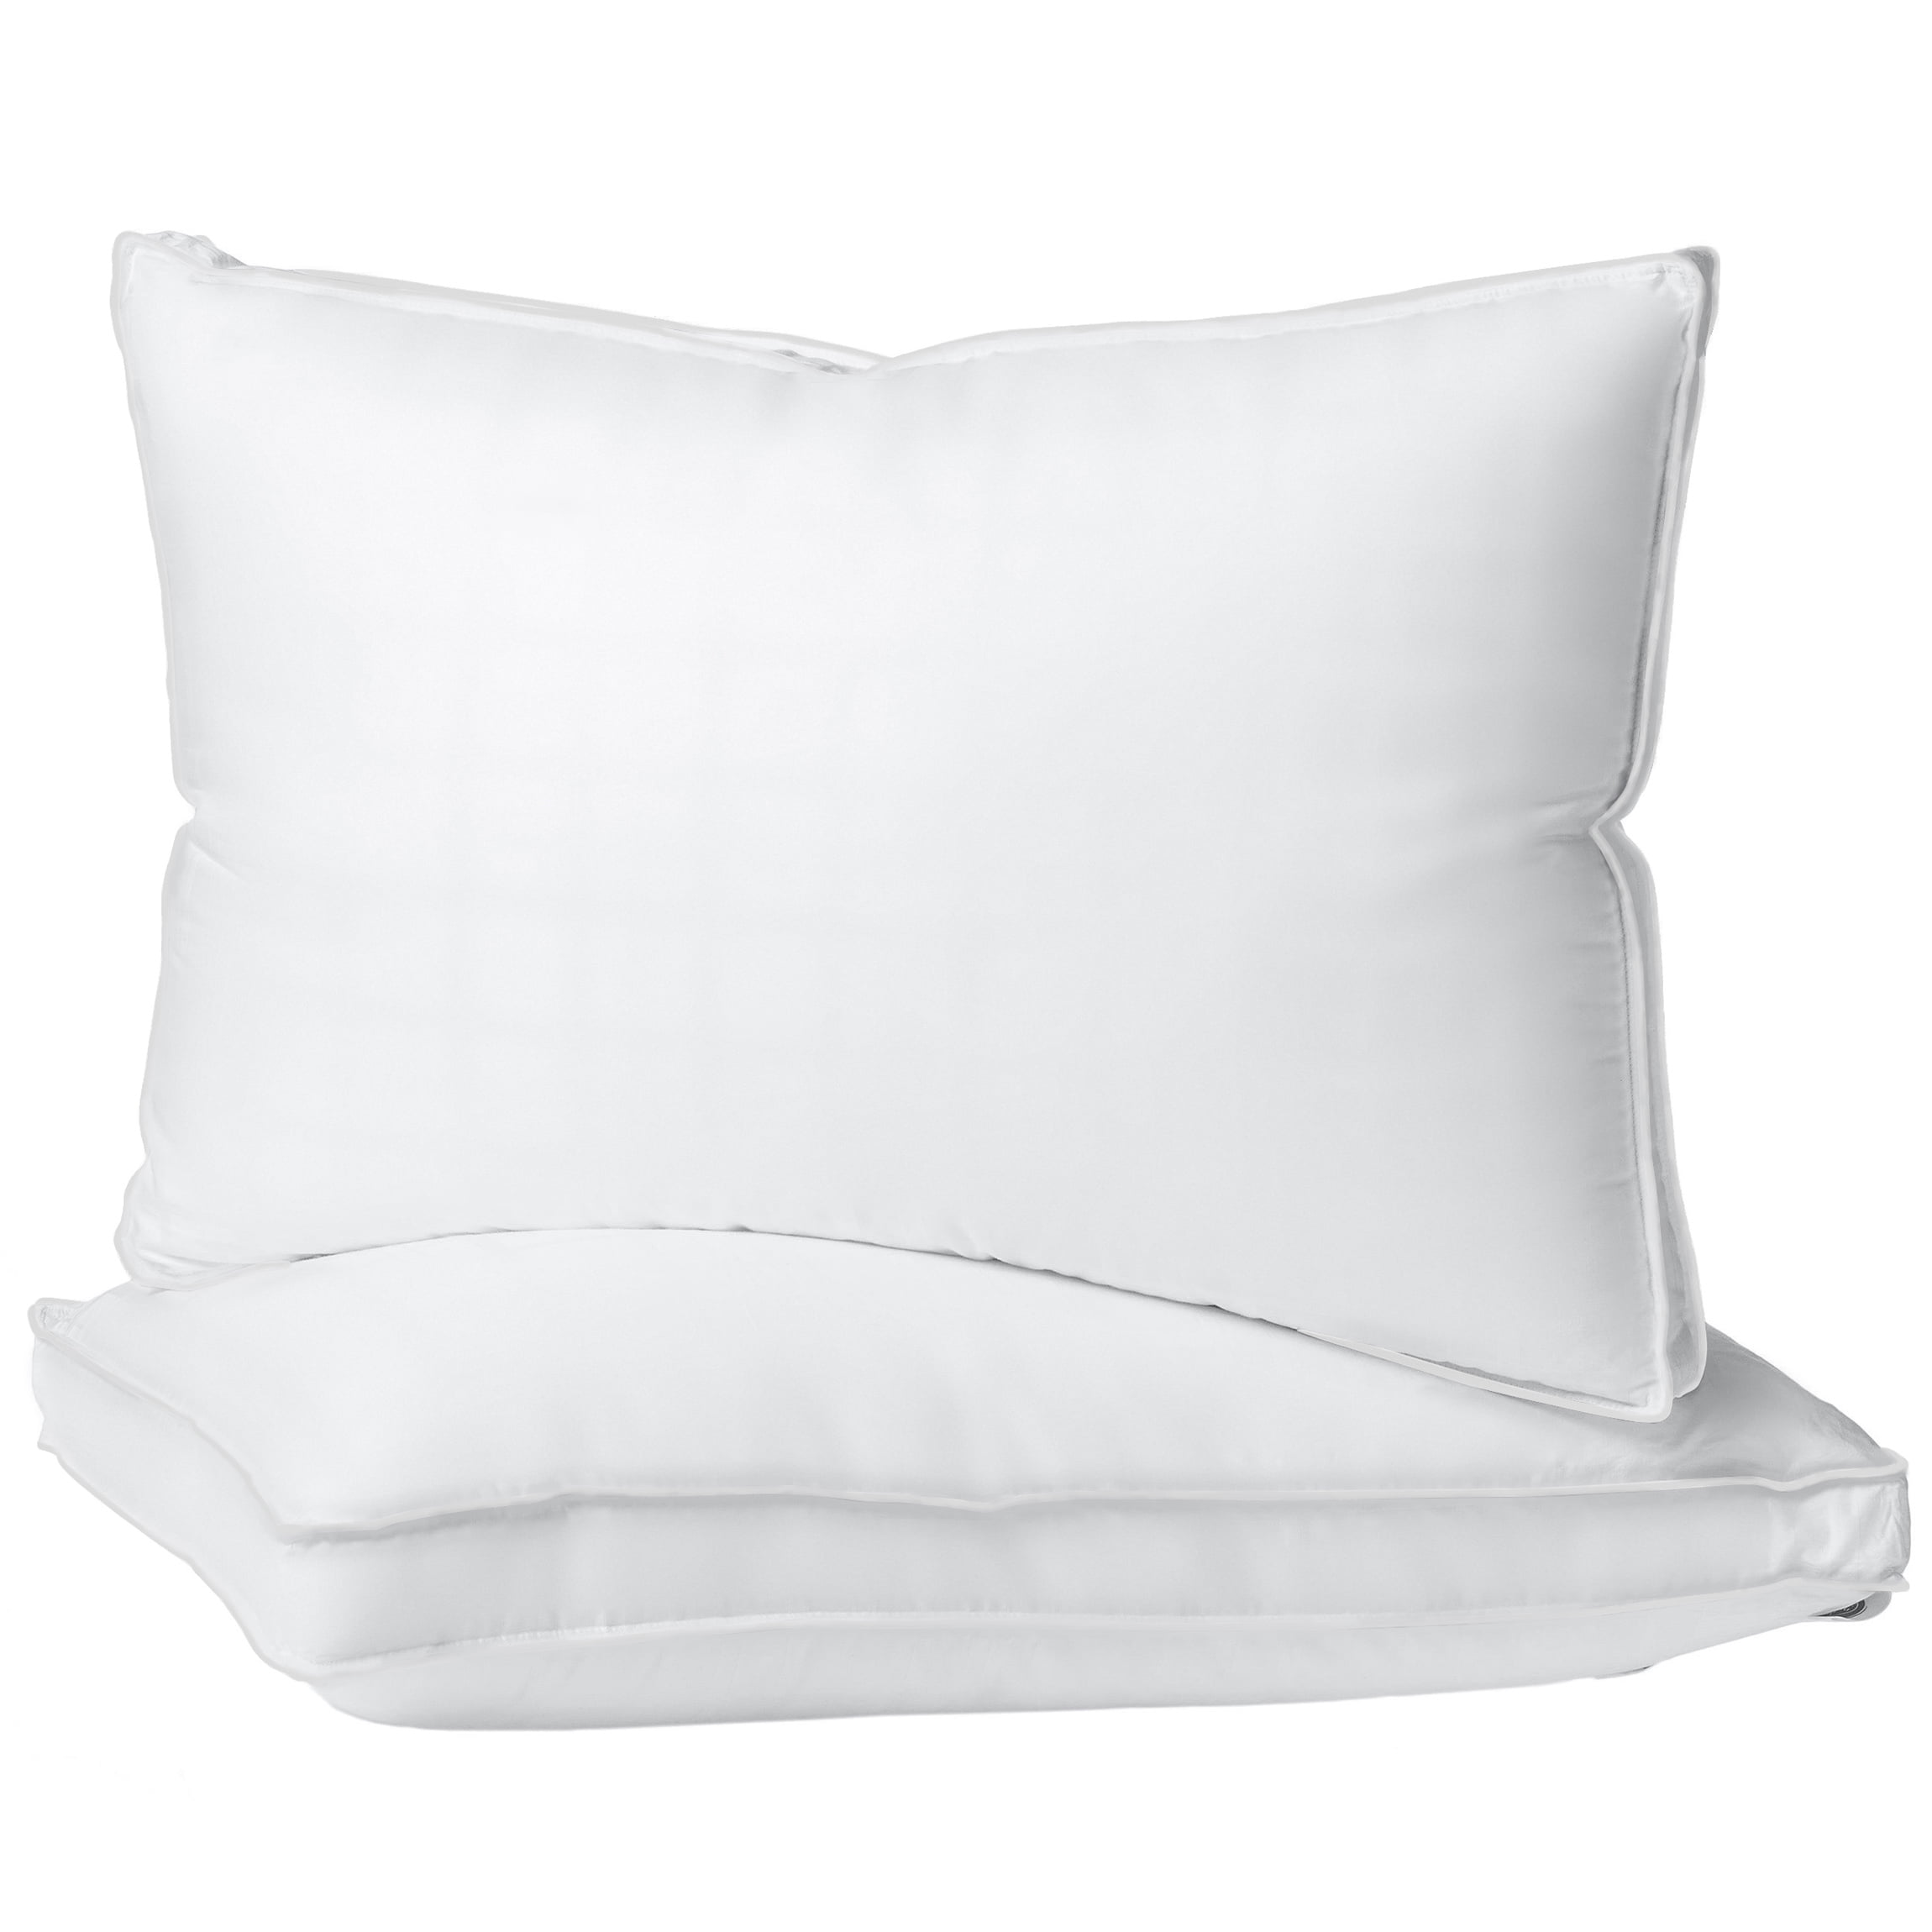 Standard Bed Pillow Comfort Sleep Cotton Hypoallergenic Firm Pillows Set of 2 